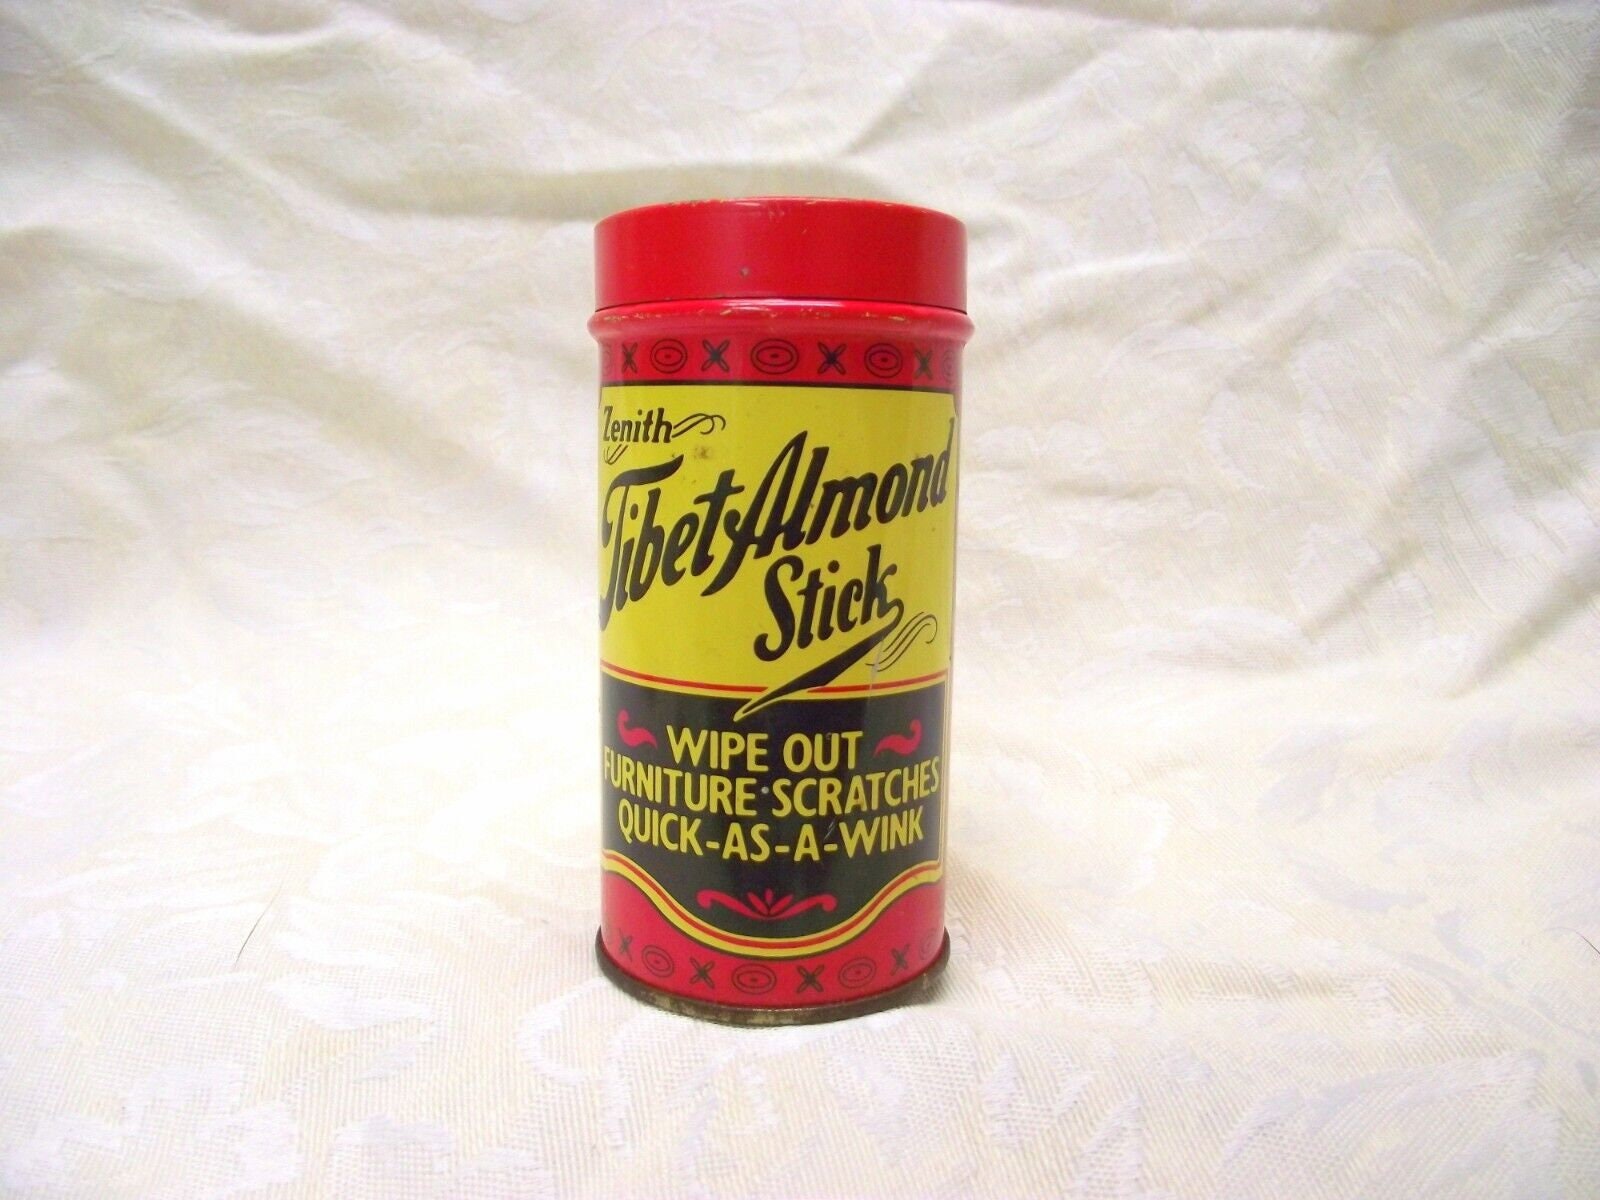 Vintage Zenith Tibet Almond Stick Scratch Remover Tin, with Stick